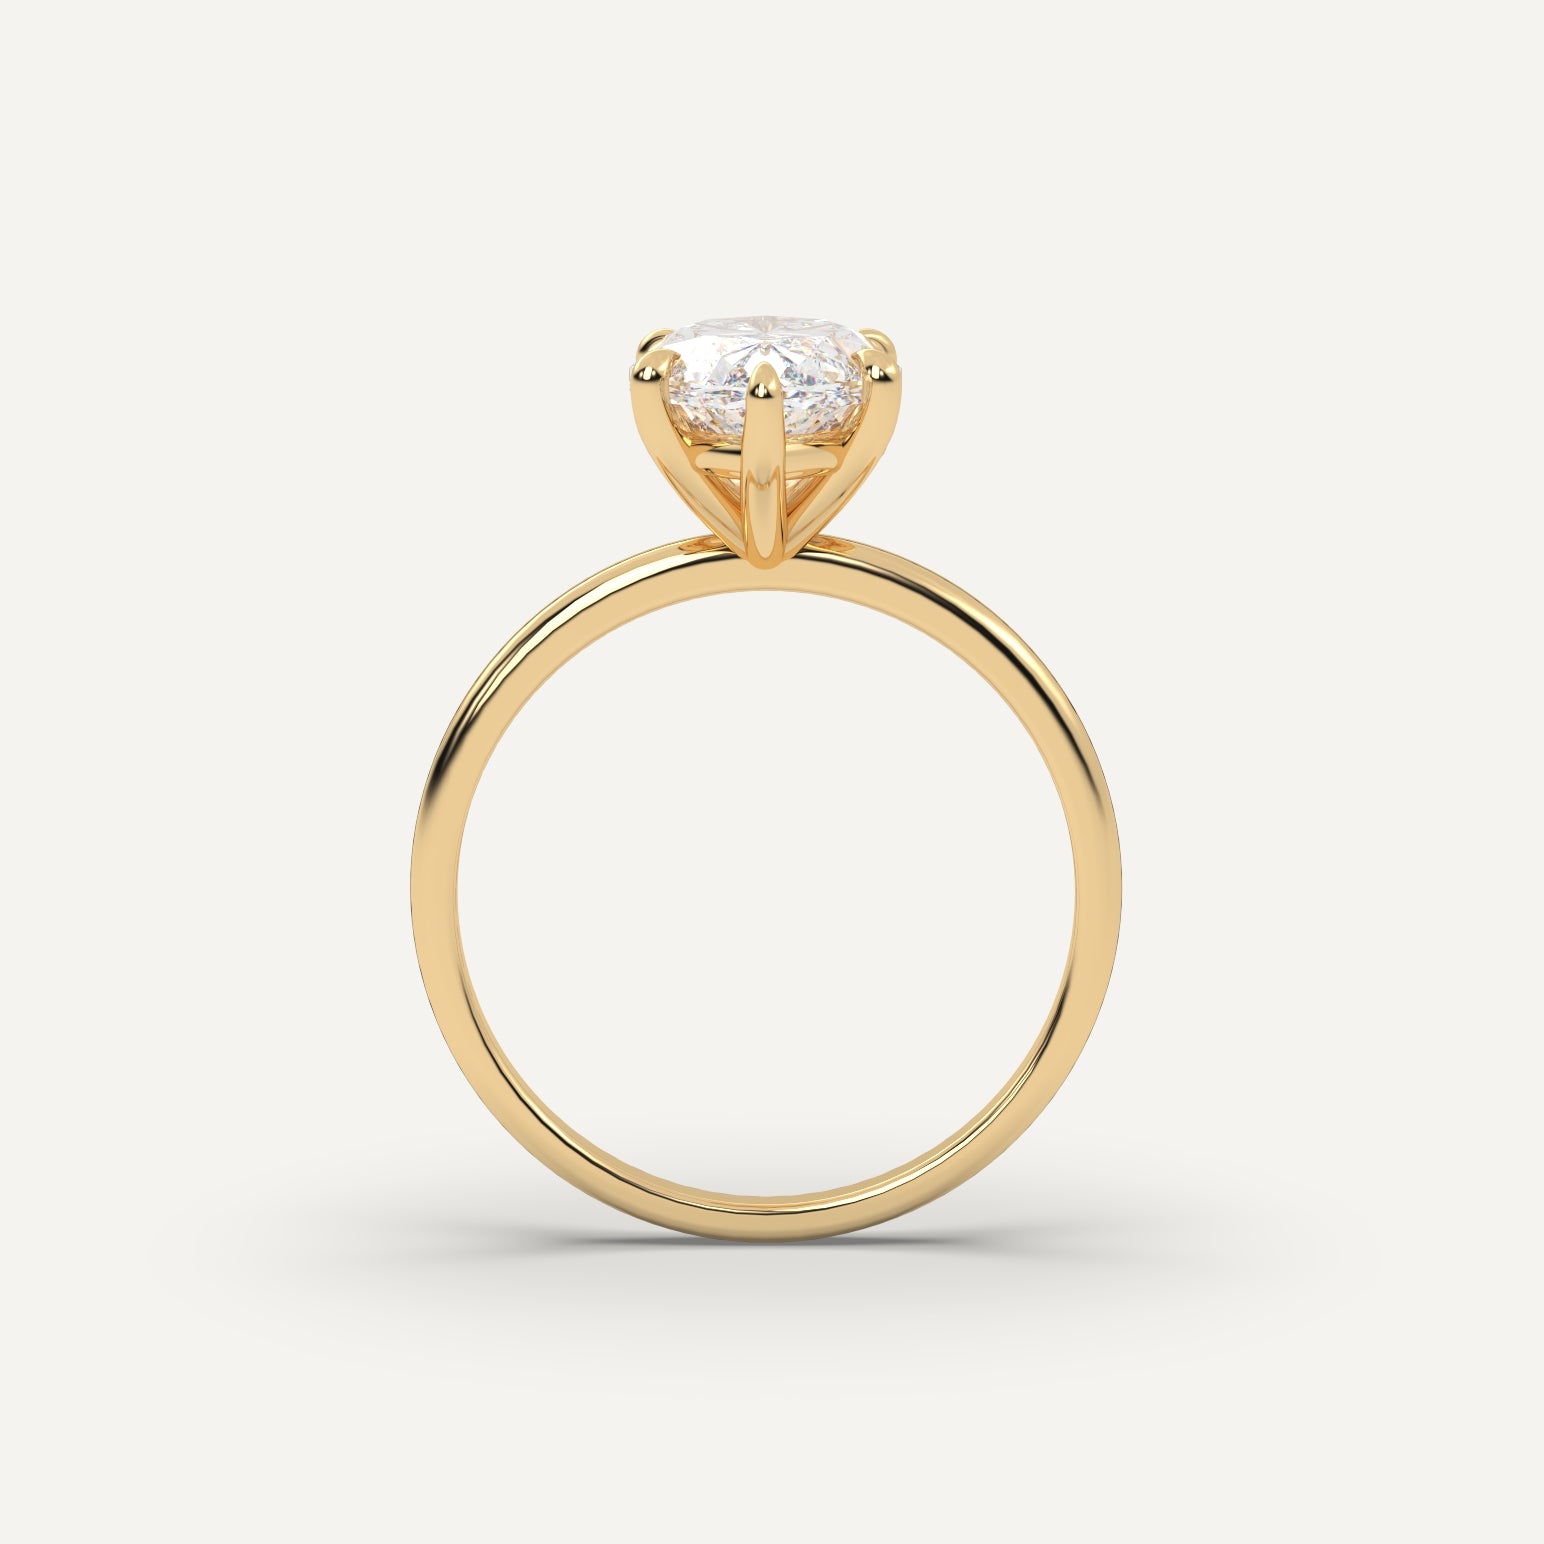 Marquise Cut Diamond Engagement Ring - 4 carat